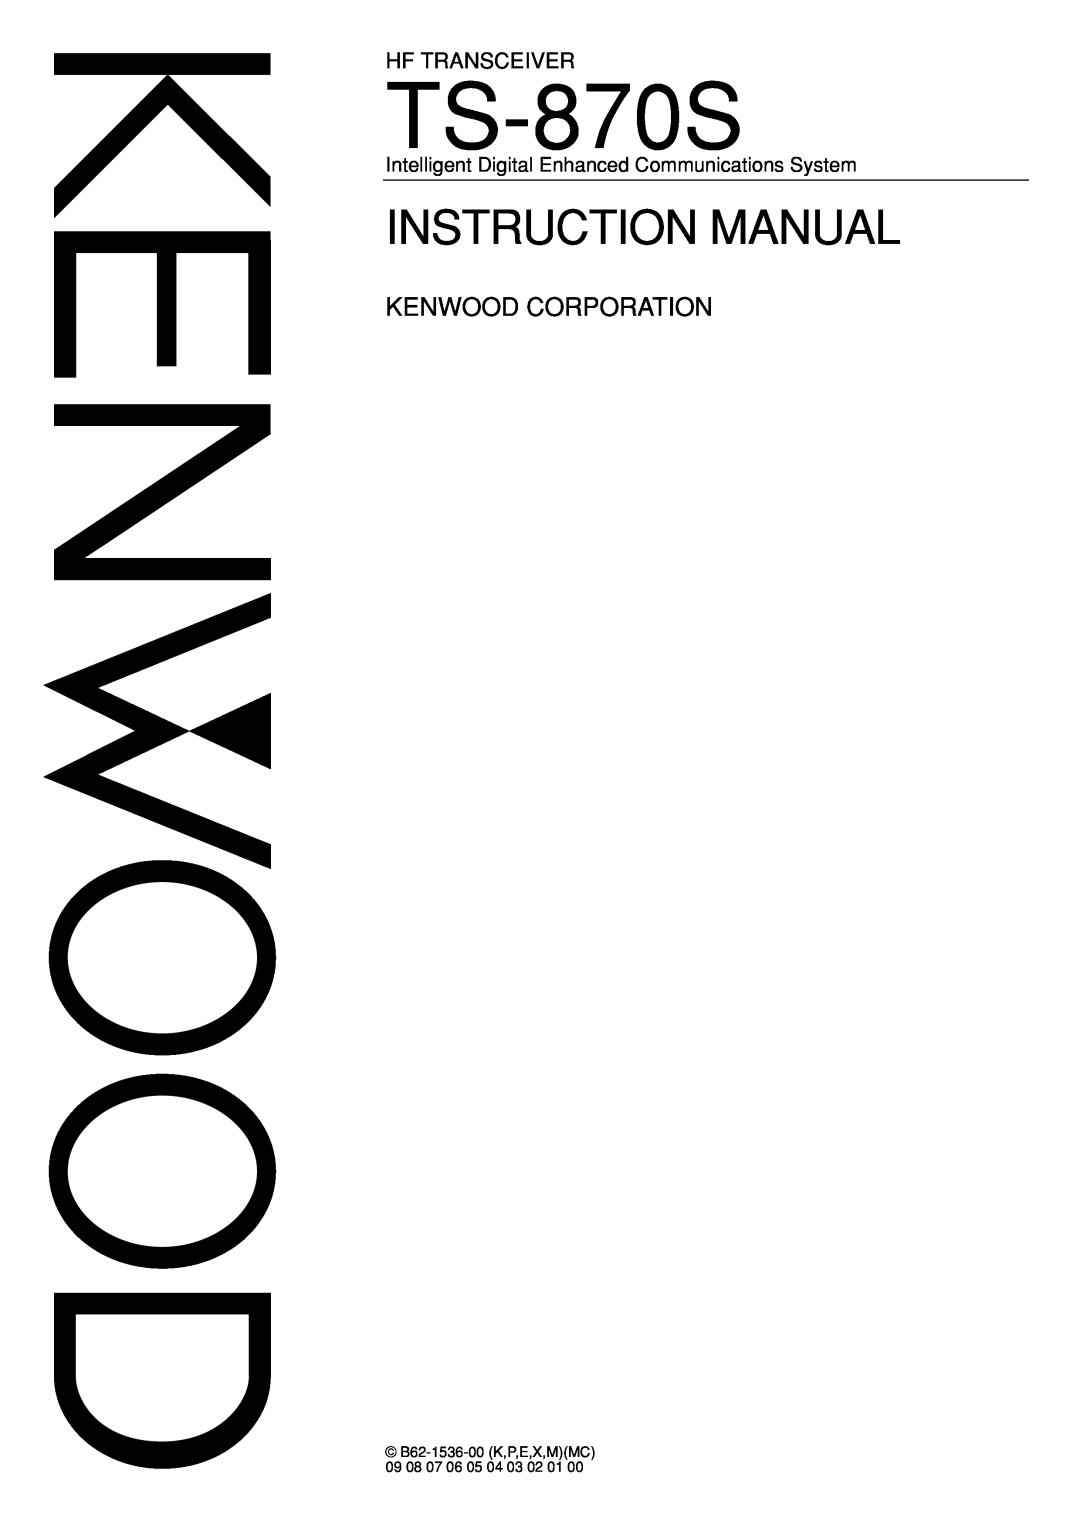 Kenwood TS-870S instruction manual Intelligent Digital Enhanced Communications System, Instruction Manual, Hf Transceiver 